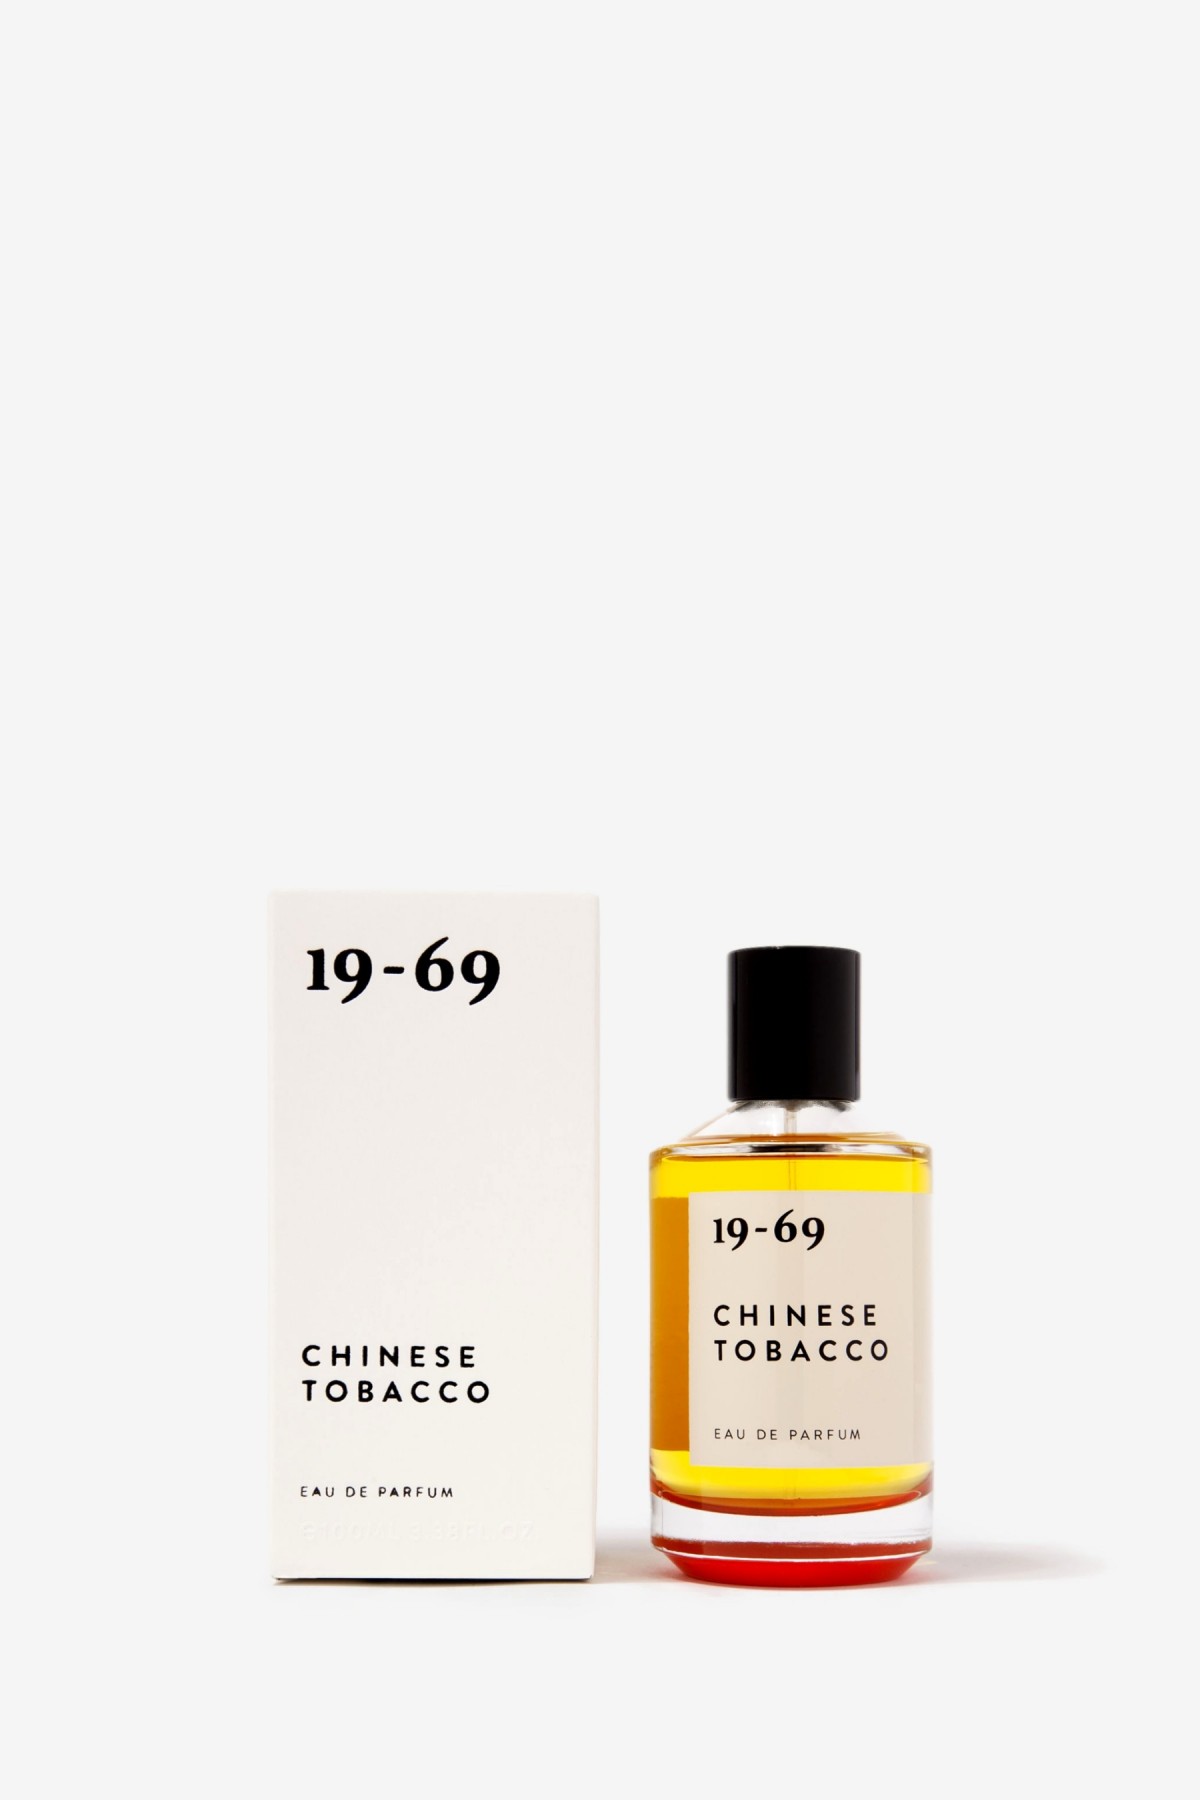 19-69 Chinese Tobacco Eau de Parfum in 50ml